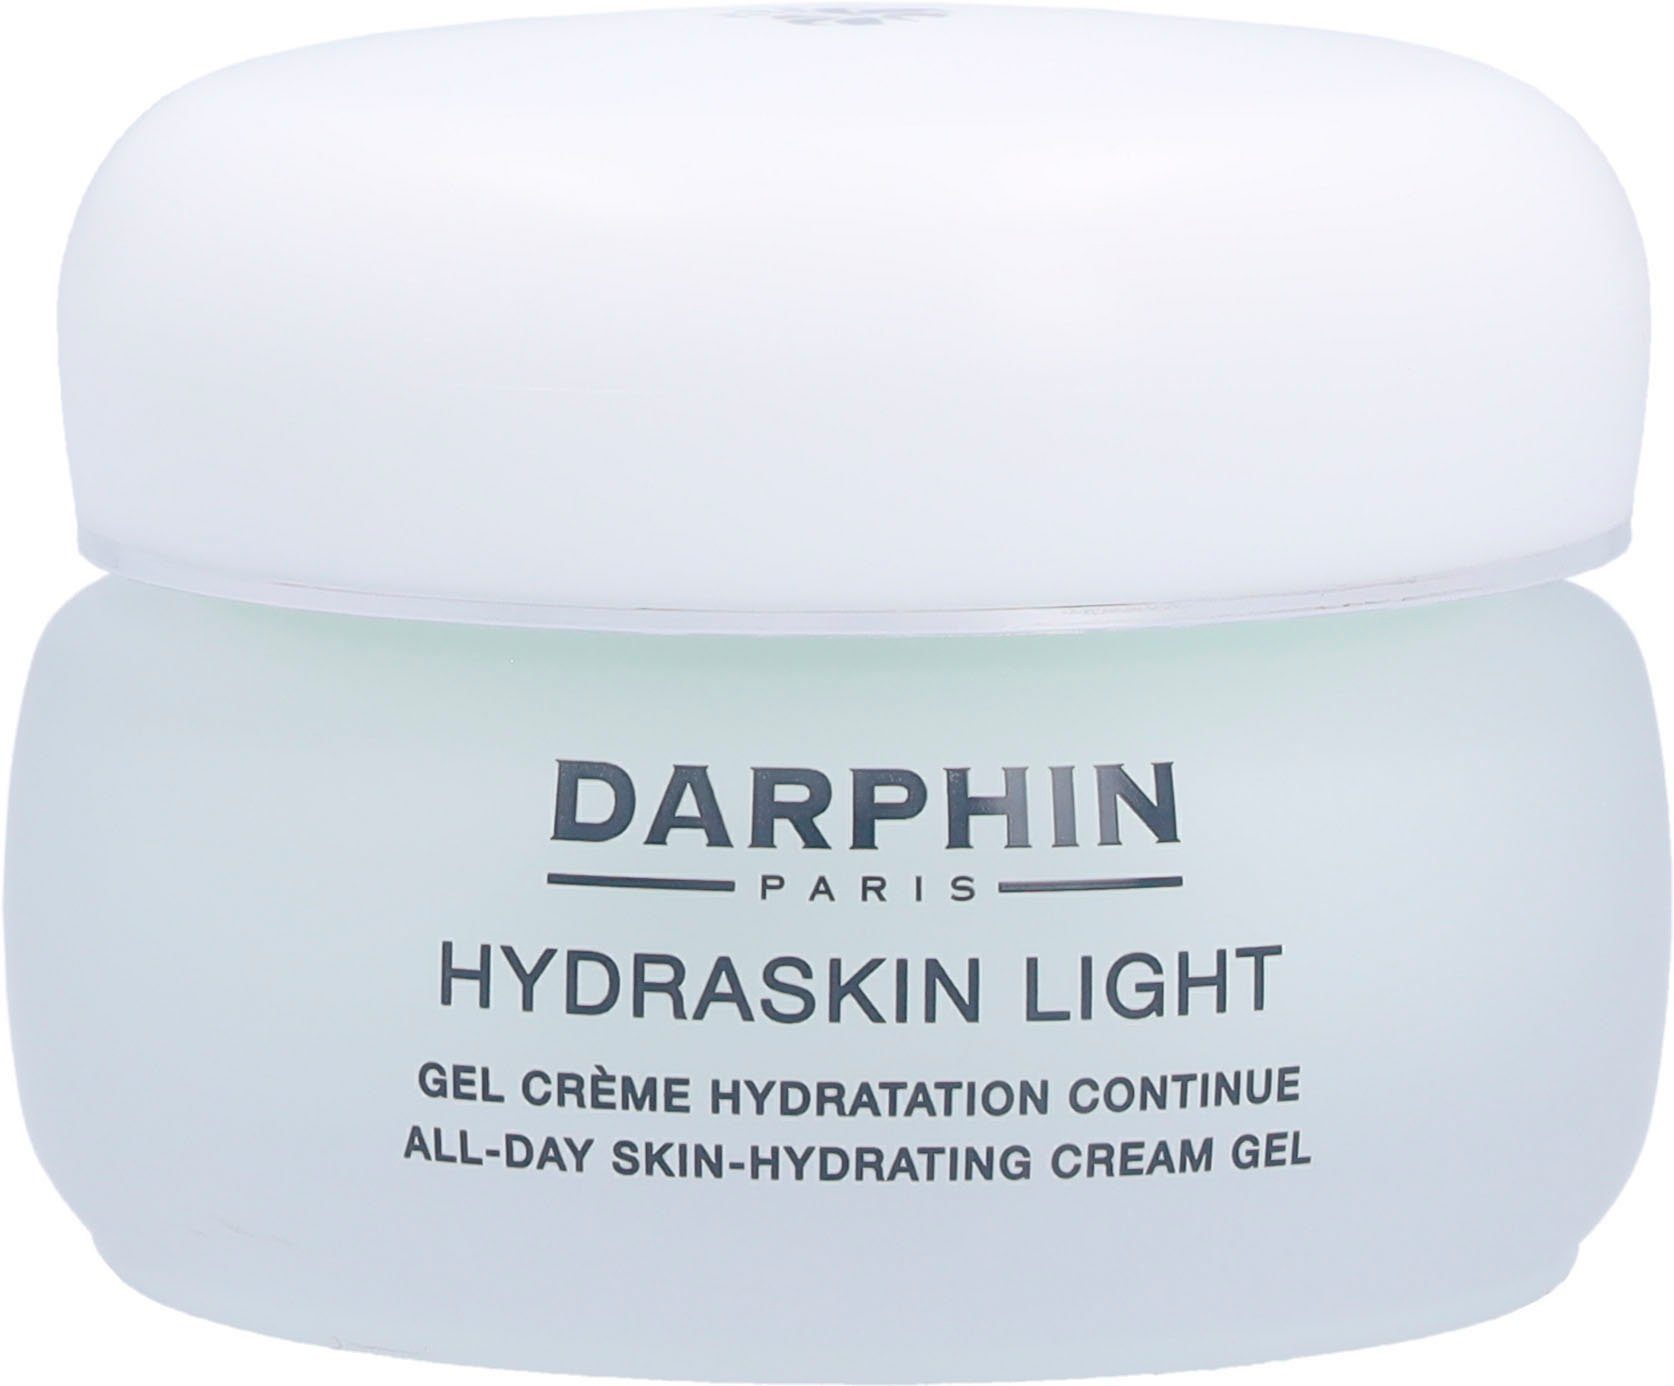 Darphin Gesichtspflege Hydraskin Light All-Day-Skin-Hydrating Cream Gel